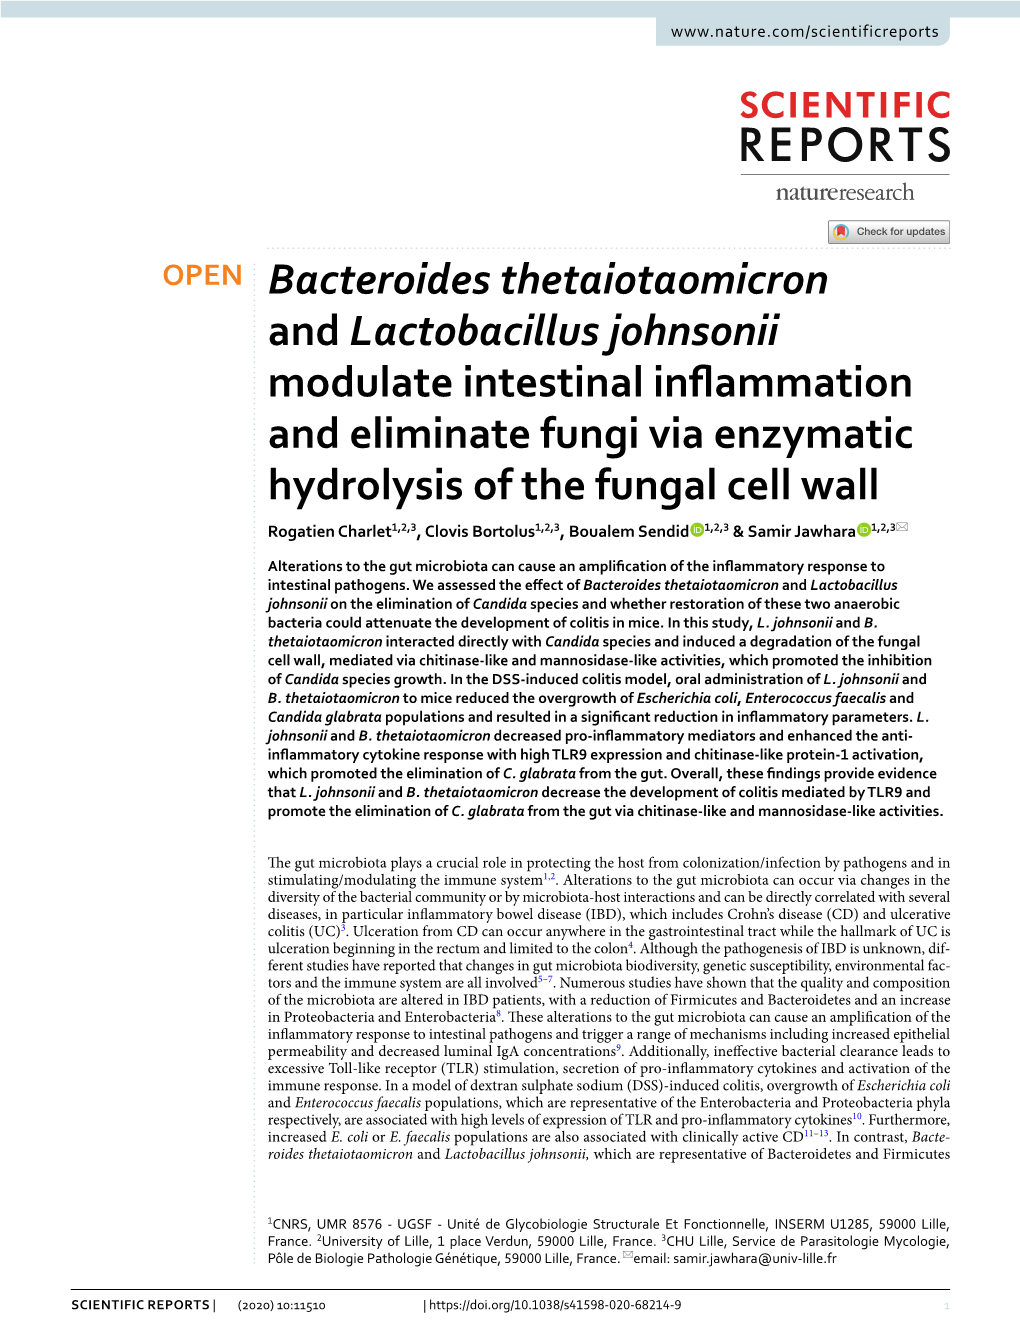 Bacteroides Thetaiotaomicron and Lactobacillus Johnsonii Modulate